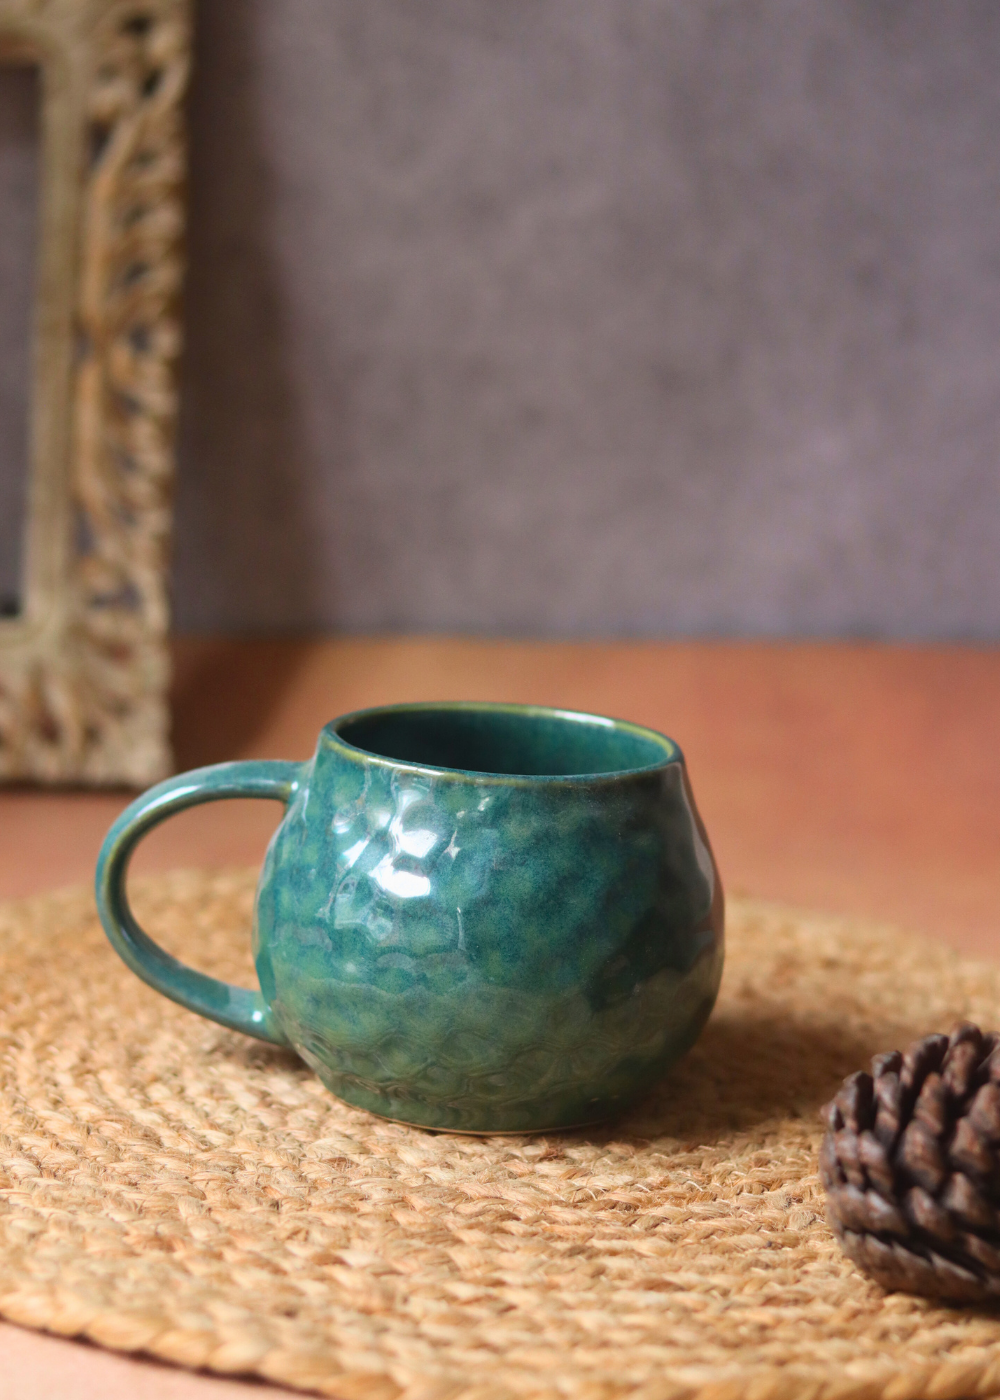 Ceramic coffee mug green color